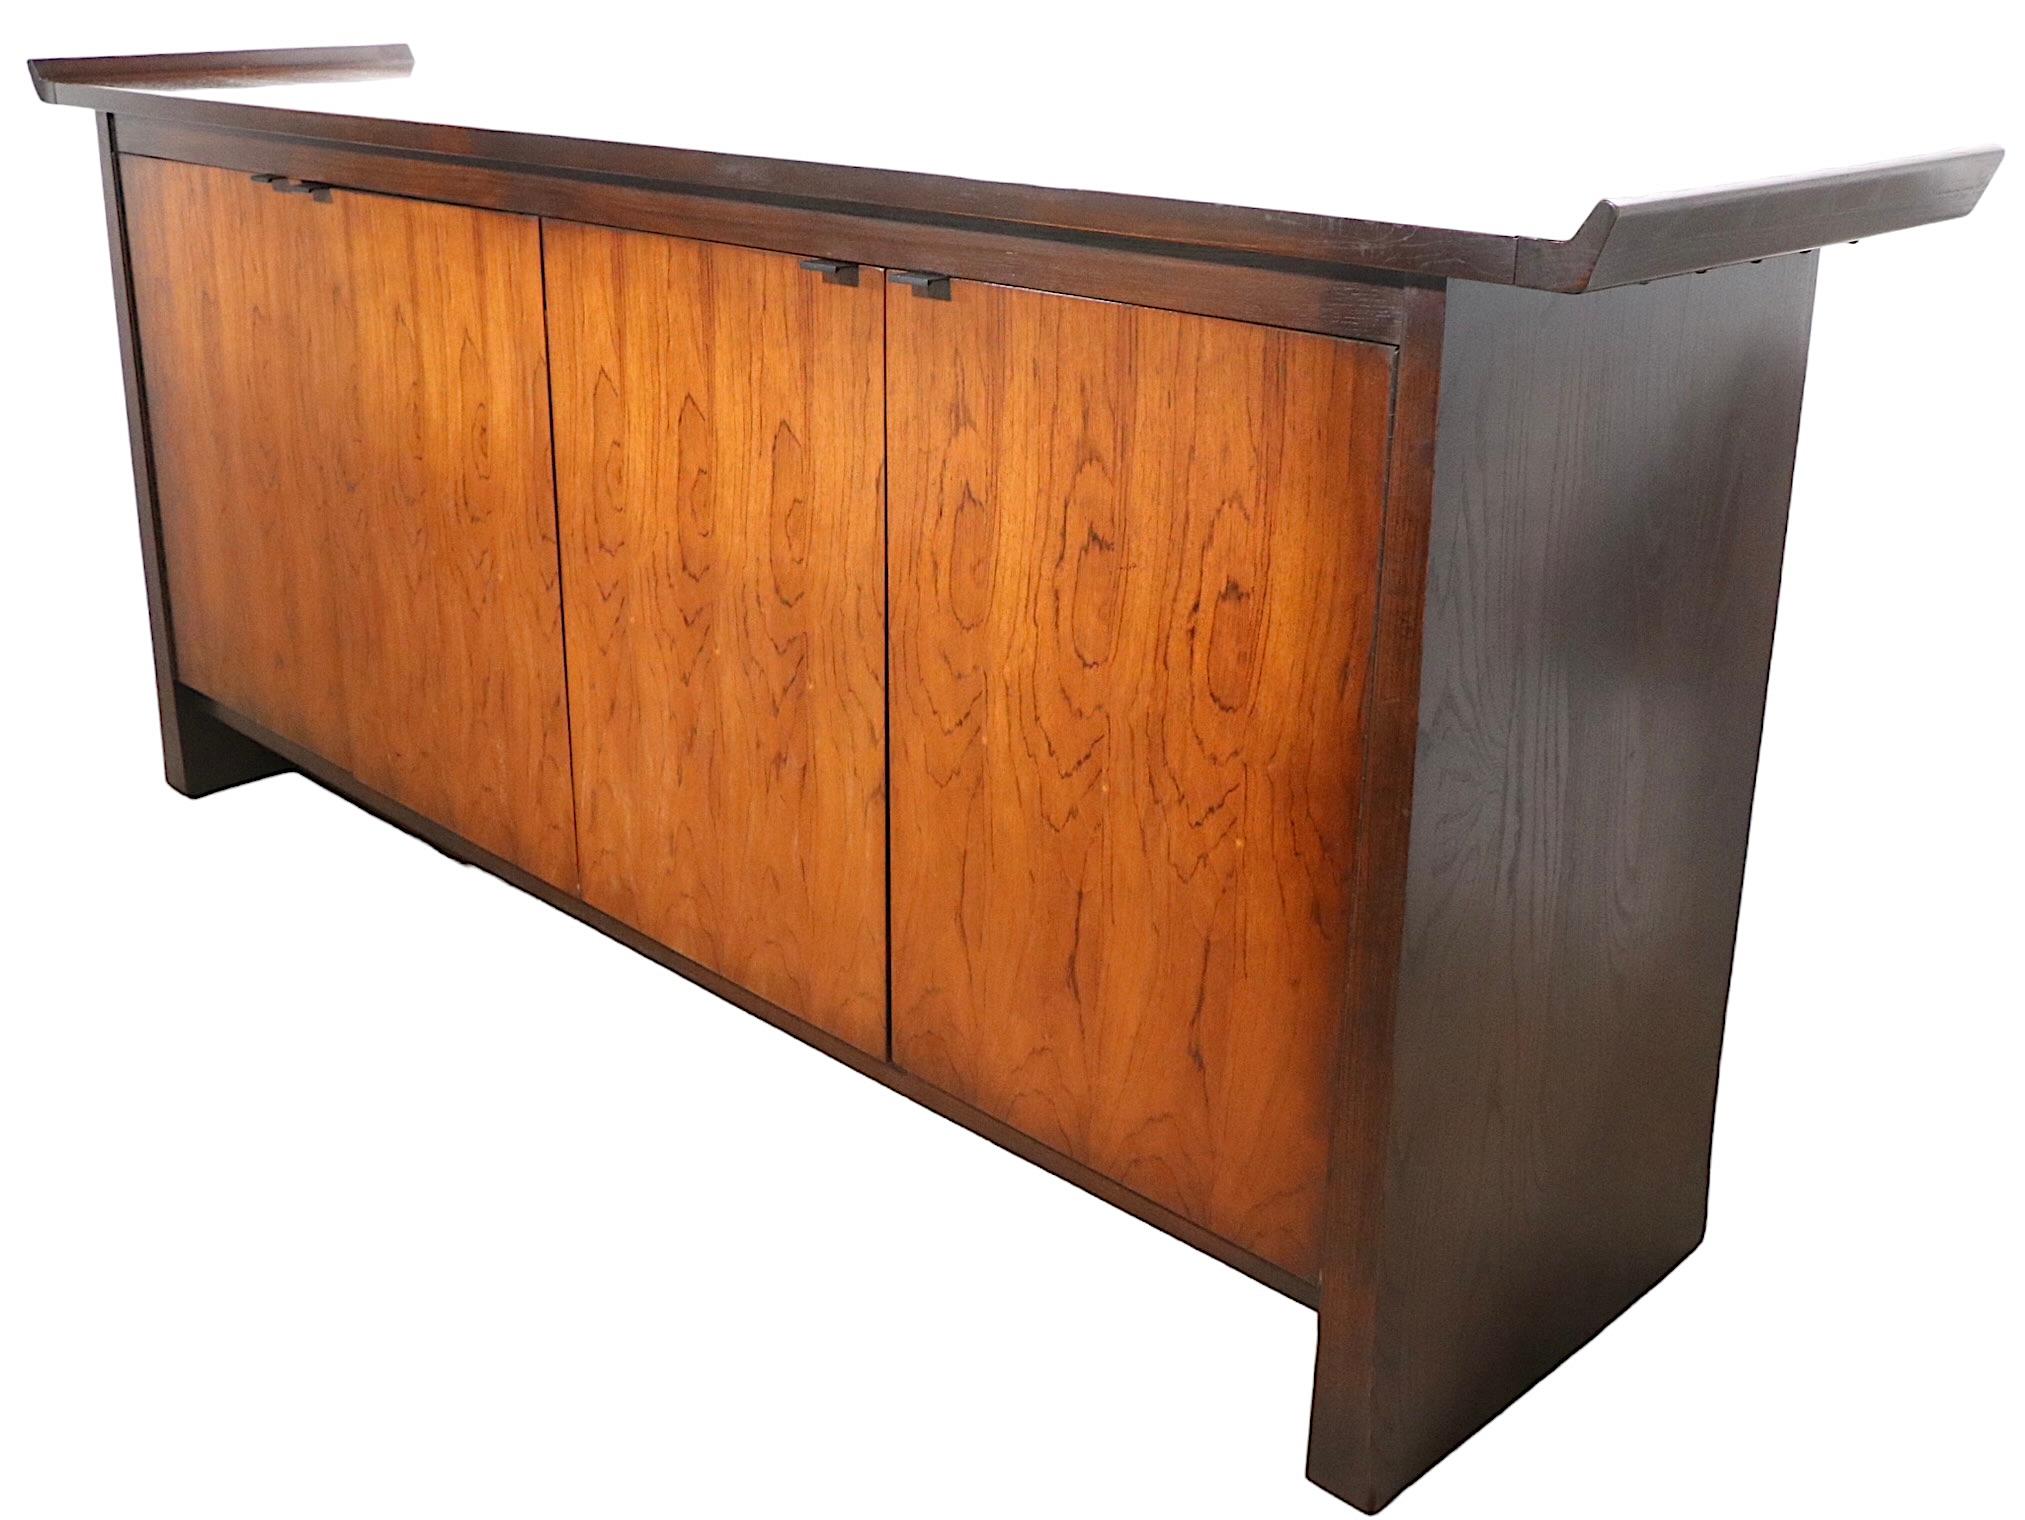 Chinese Export Bernhardt Credenza Dresser Sideboard For Sale